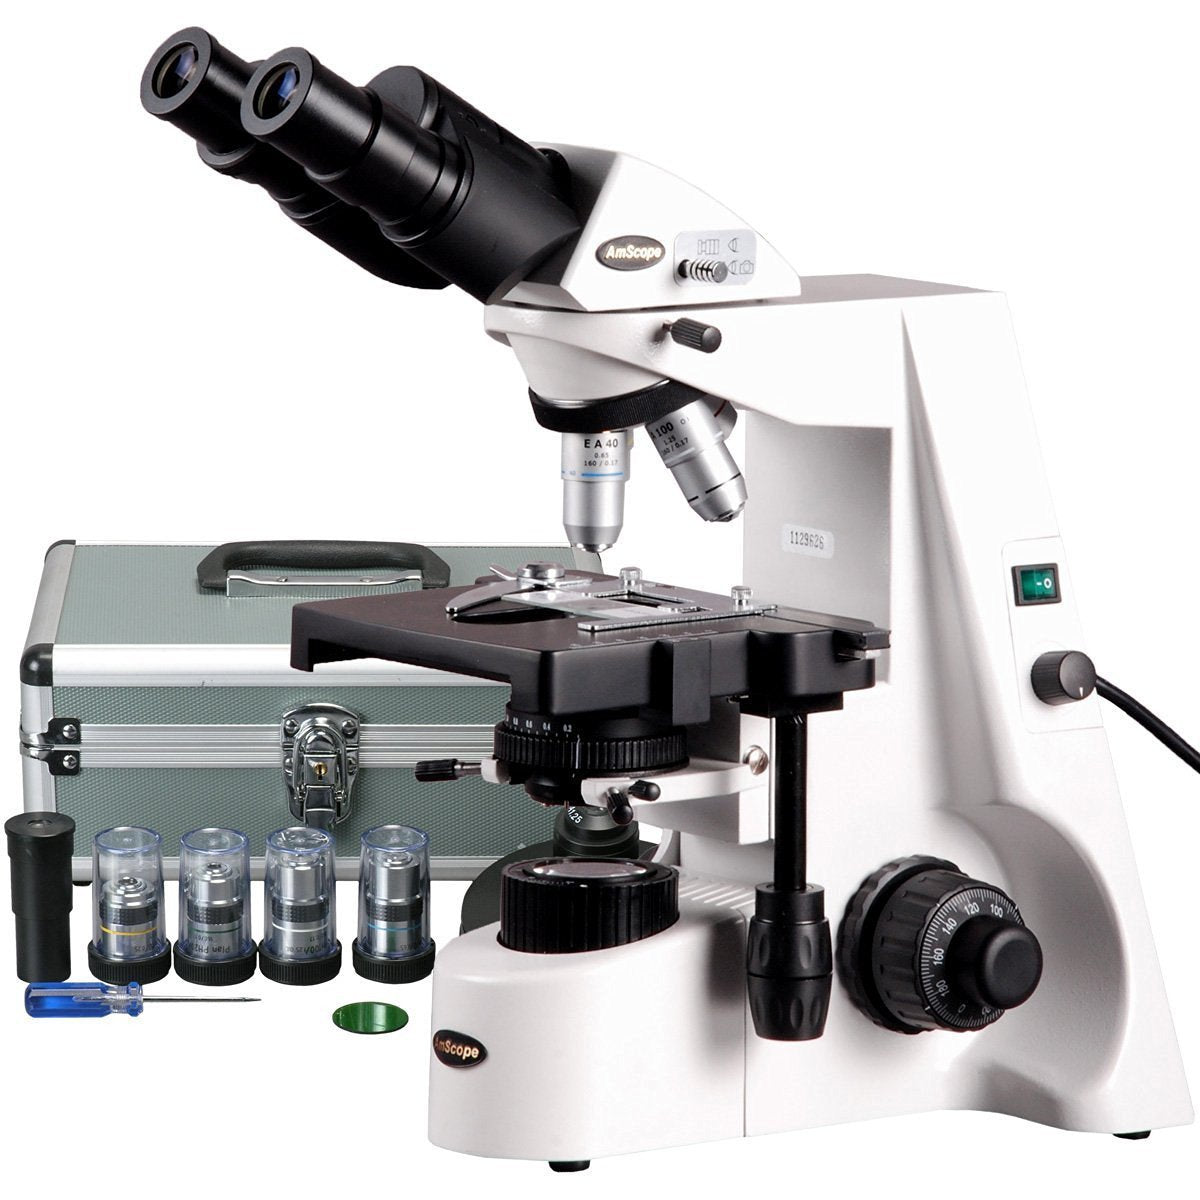 AmScope 40X-2000X Professional Infinity Phase Contrast Kohler Compound Microscope